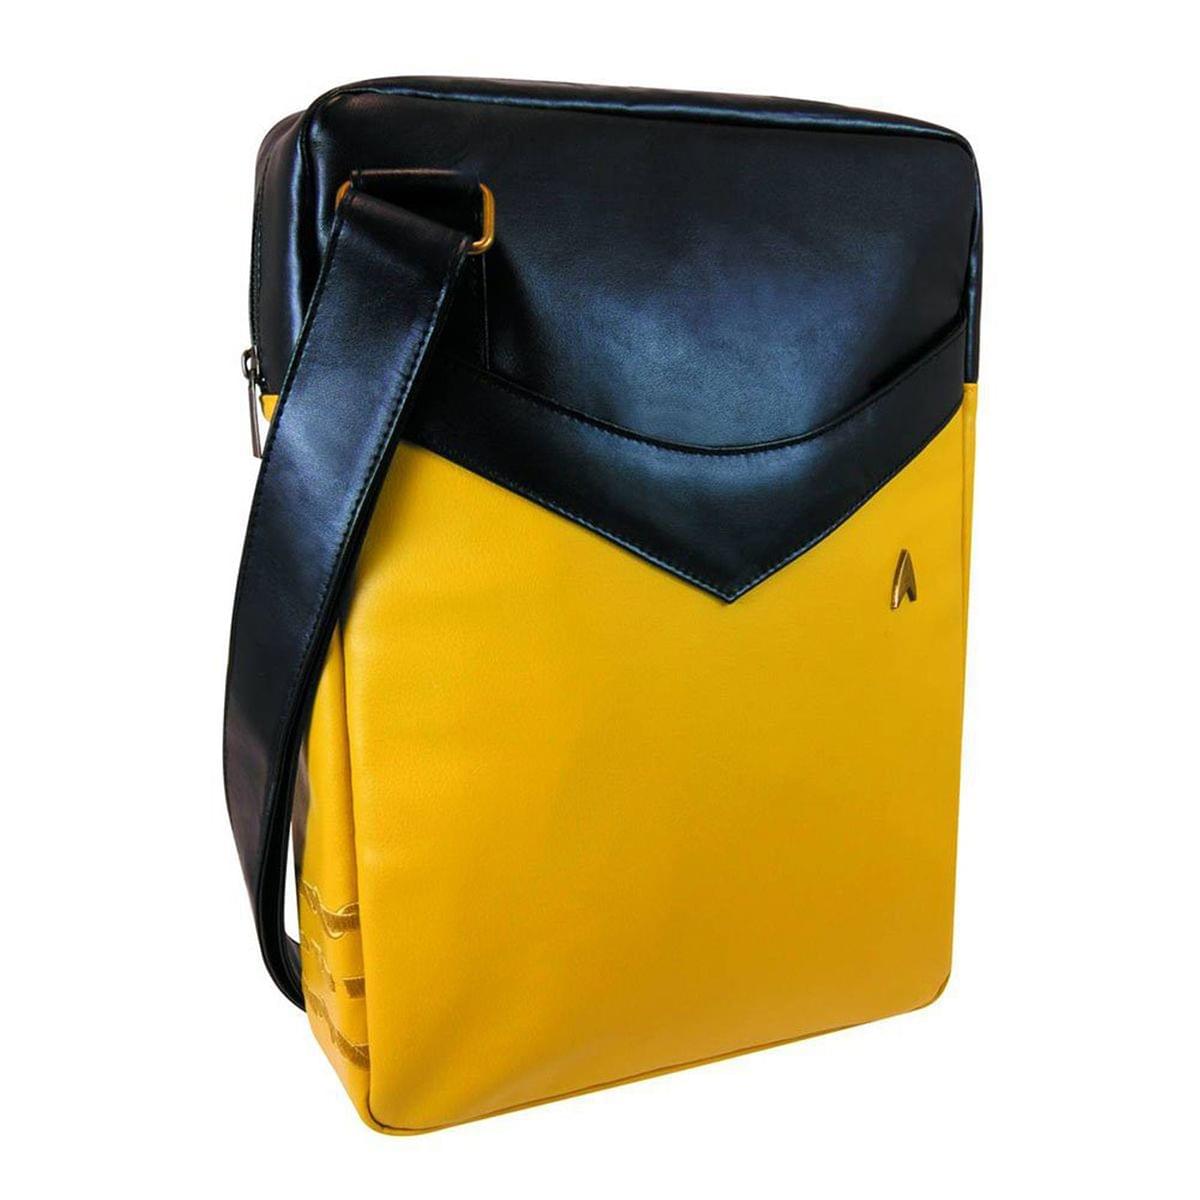 Star Trek The Original Series Laptop Bag Gold Uniform